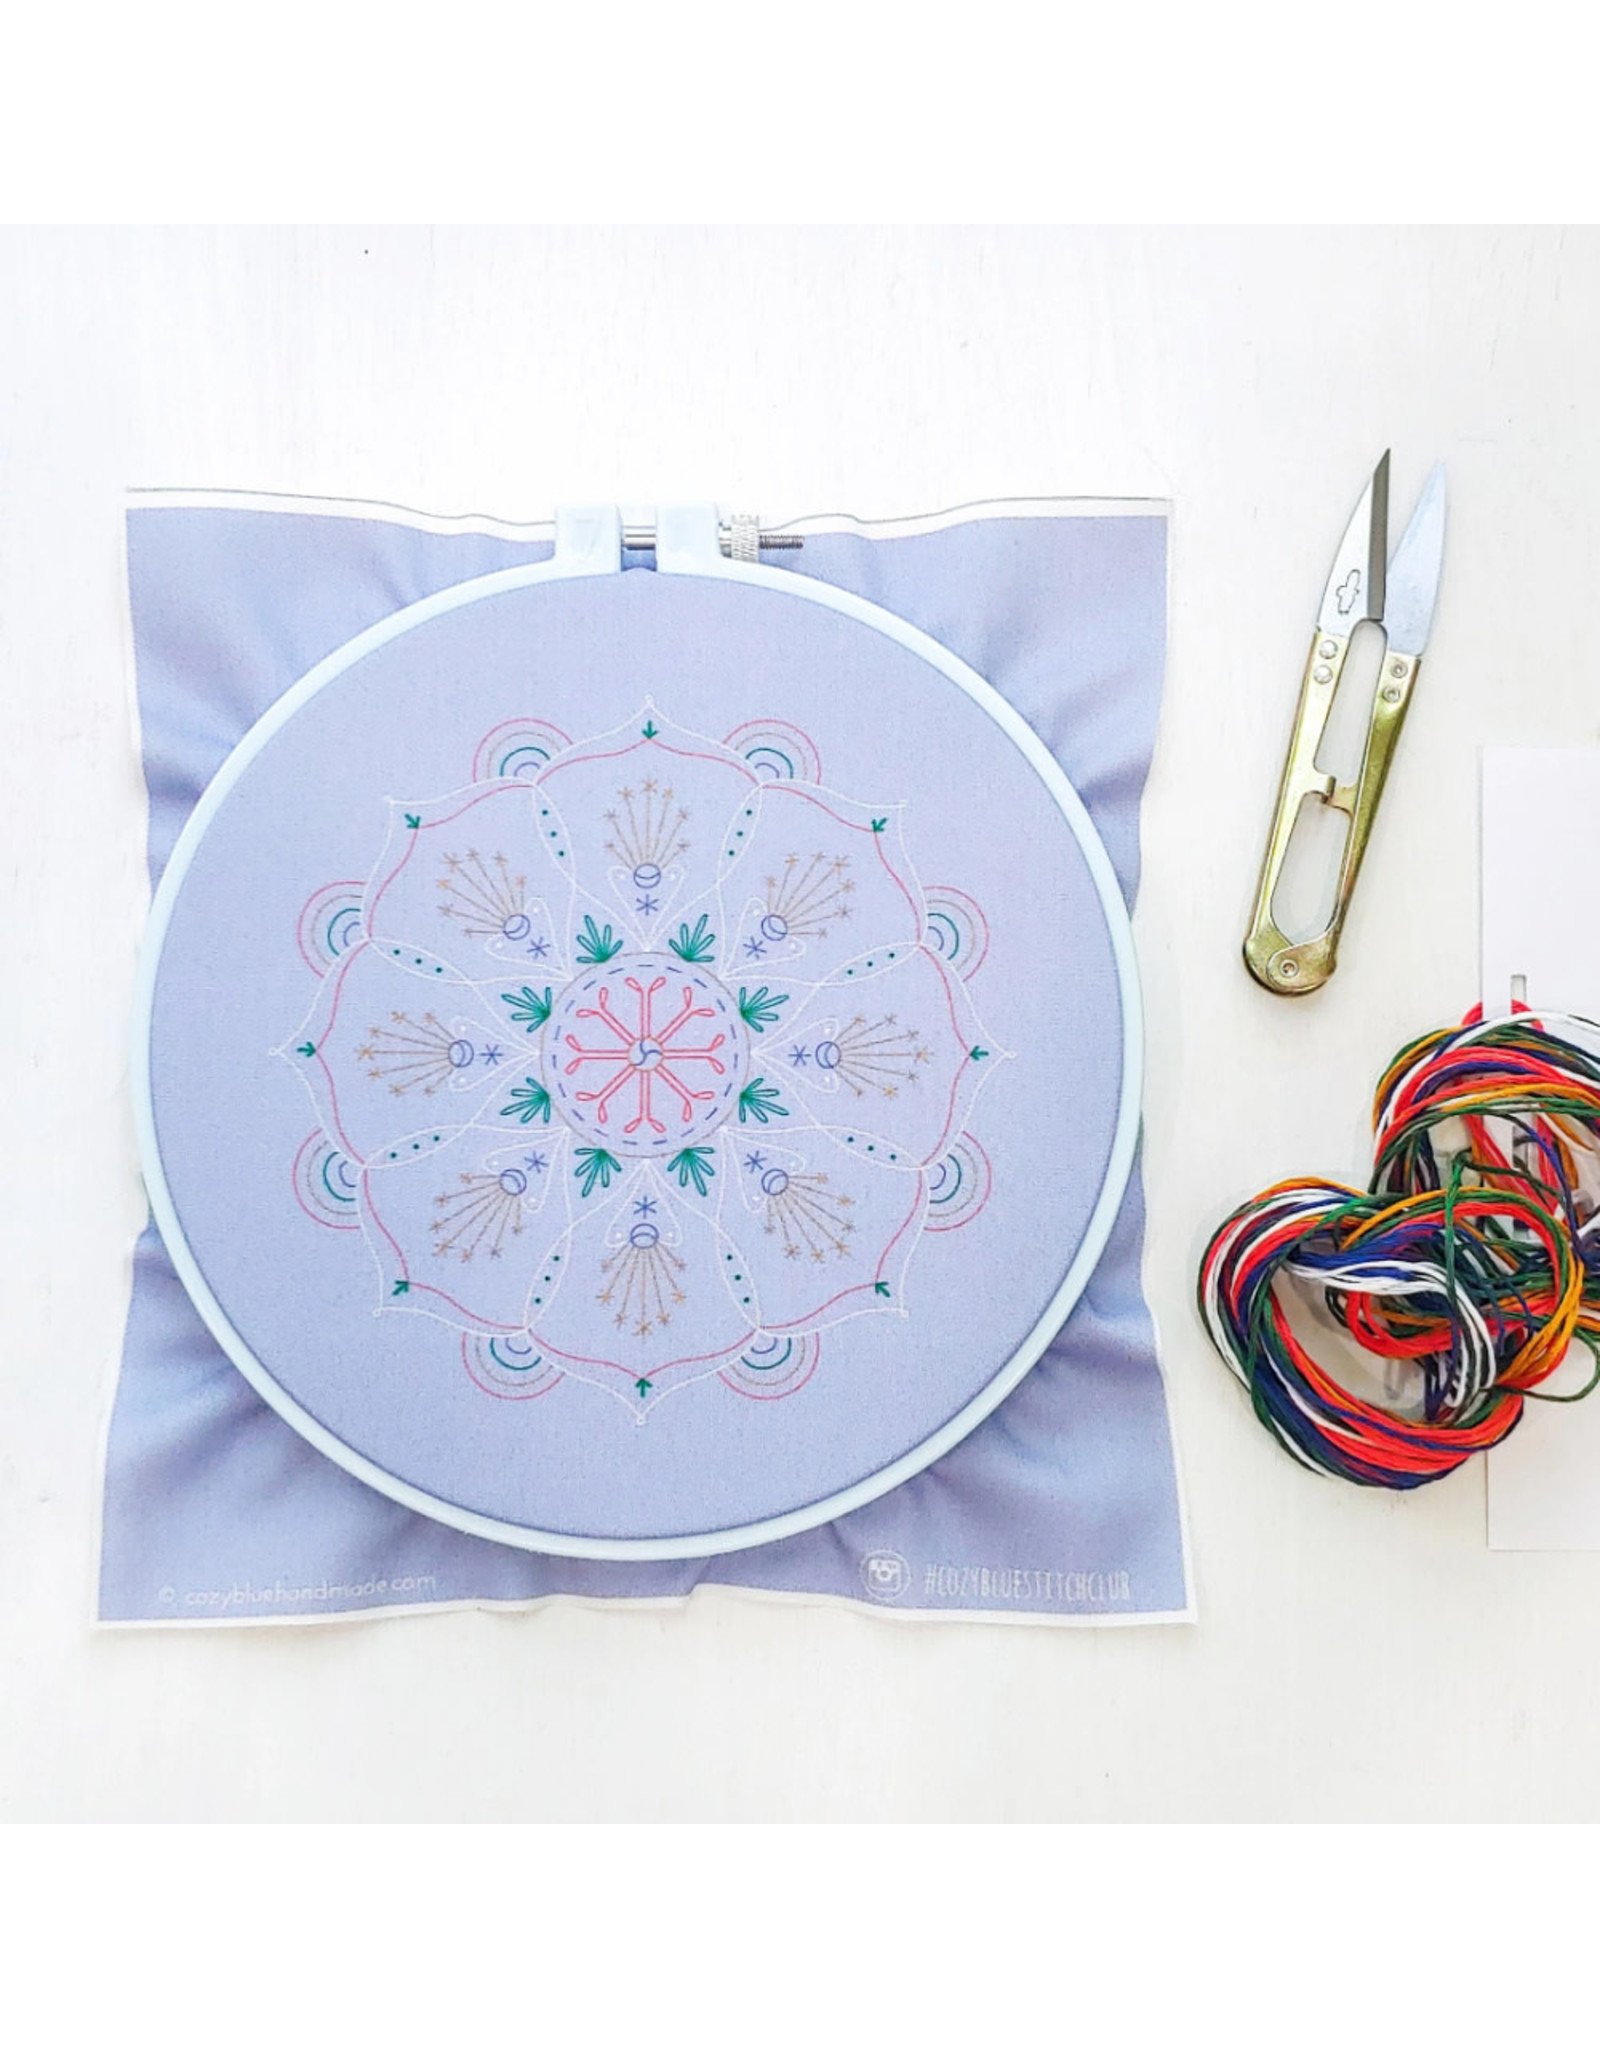 cozyblue Rainbow Mandala Embroidery Kit from cozyblue